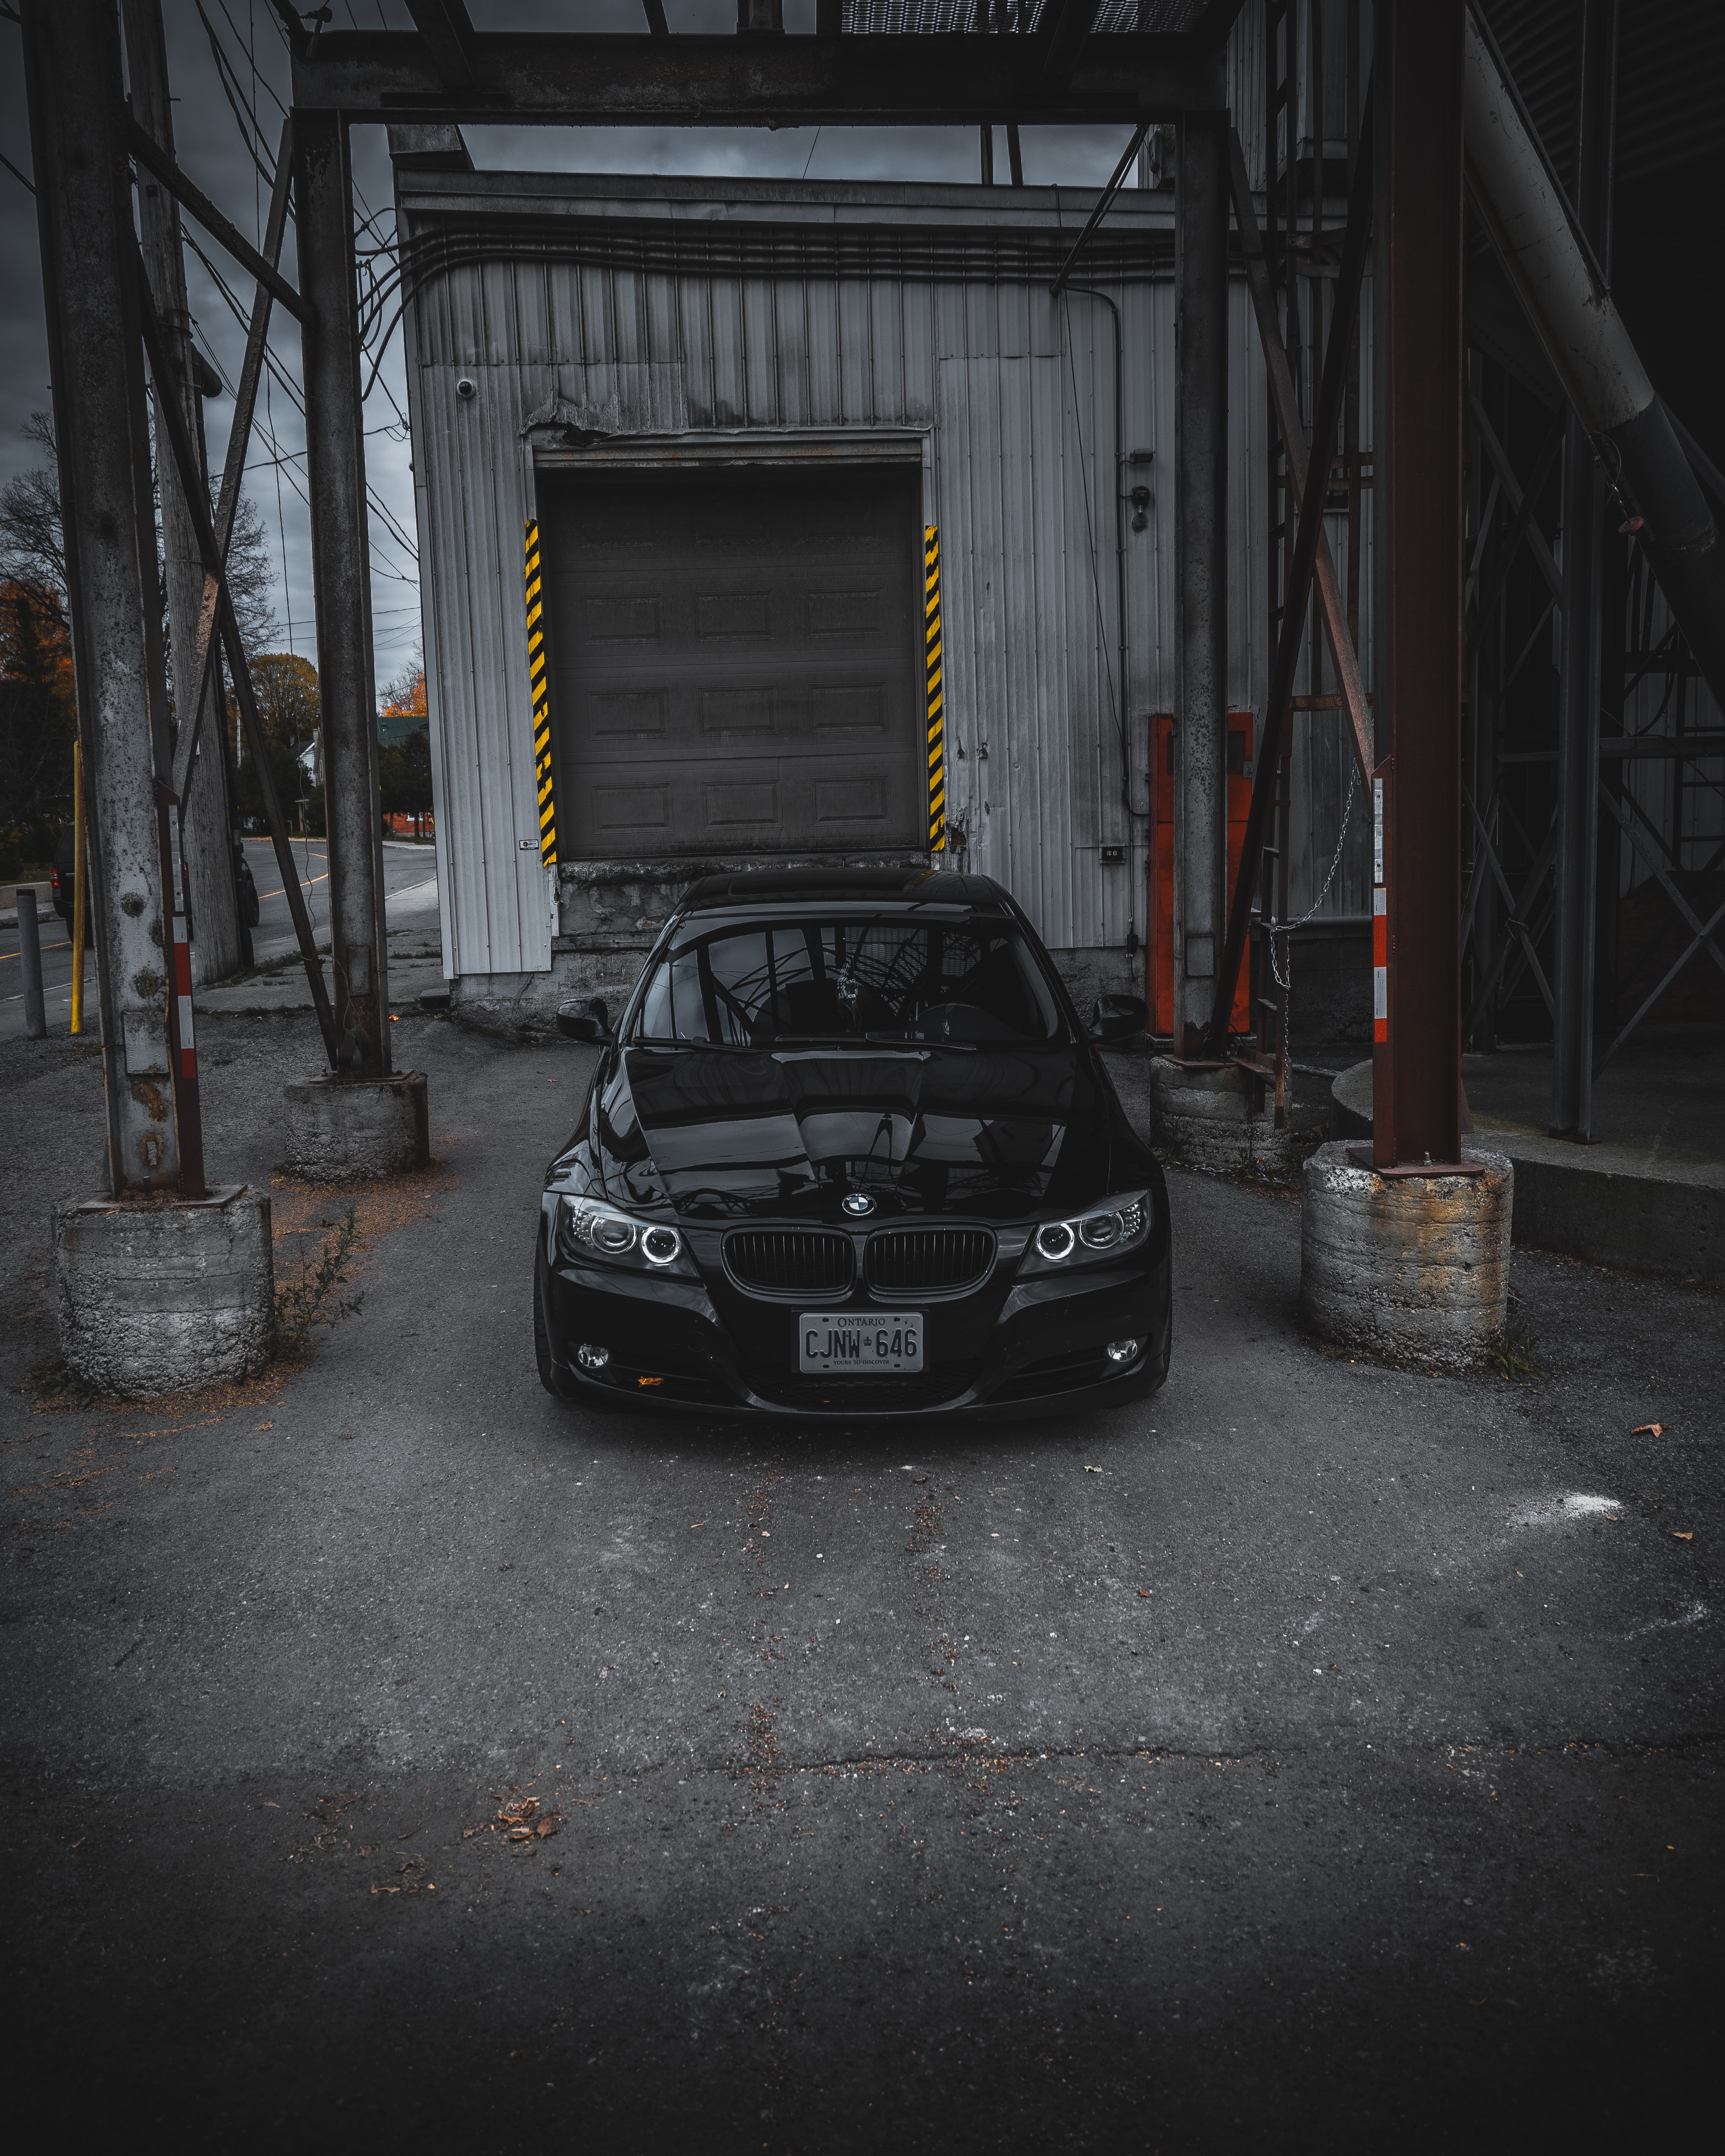 bmw, cars, car, black, front view, garage images